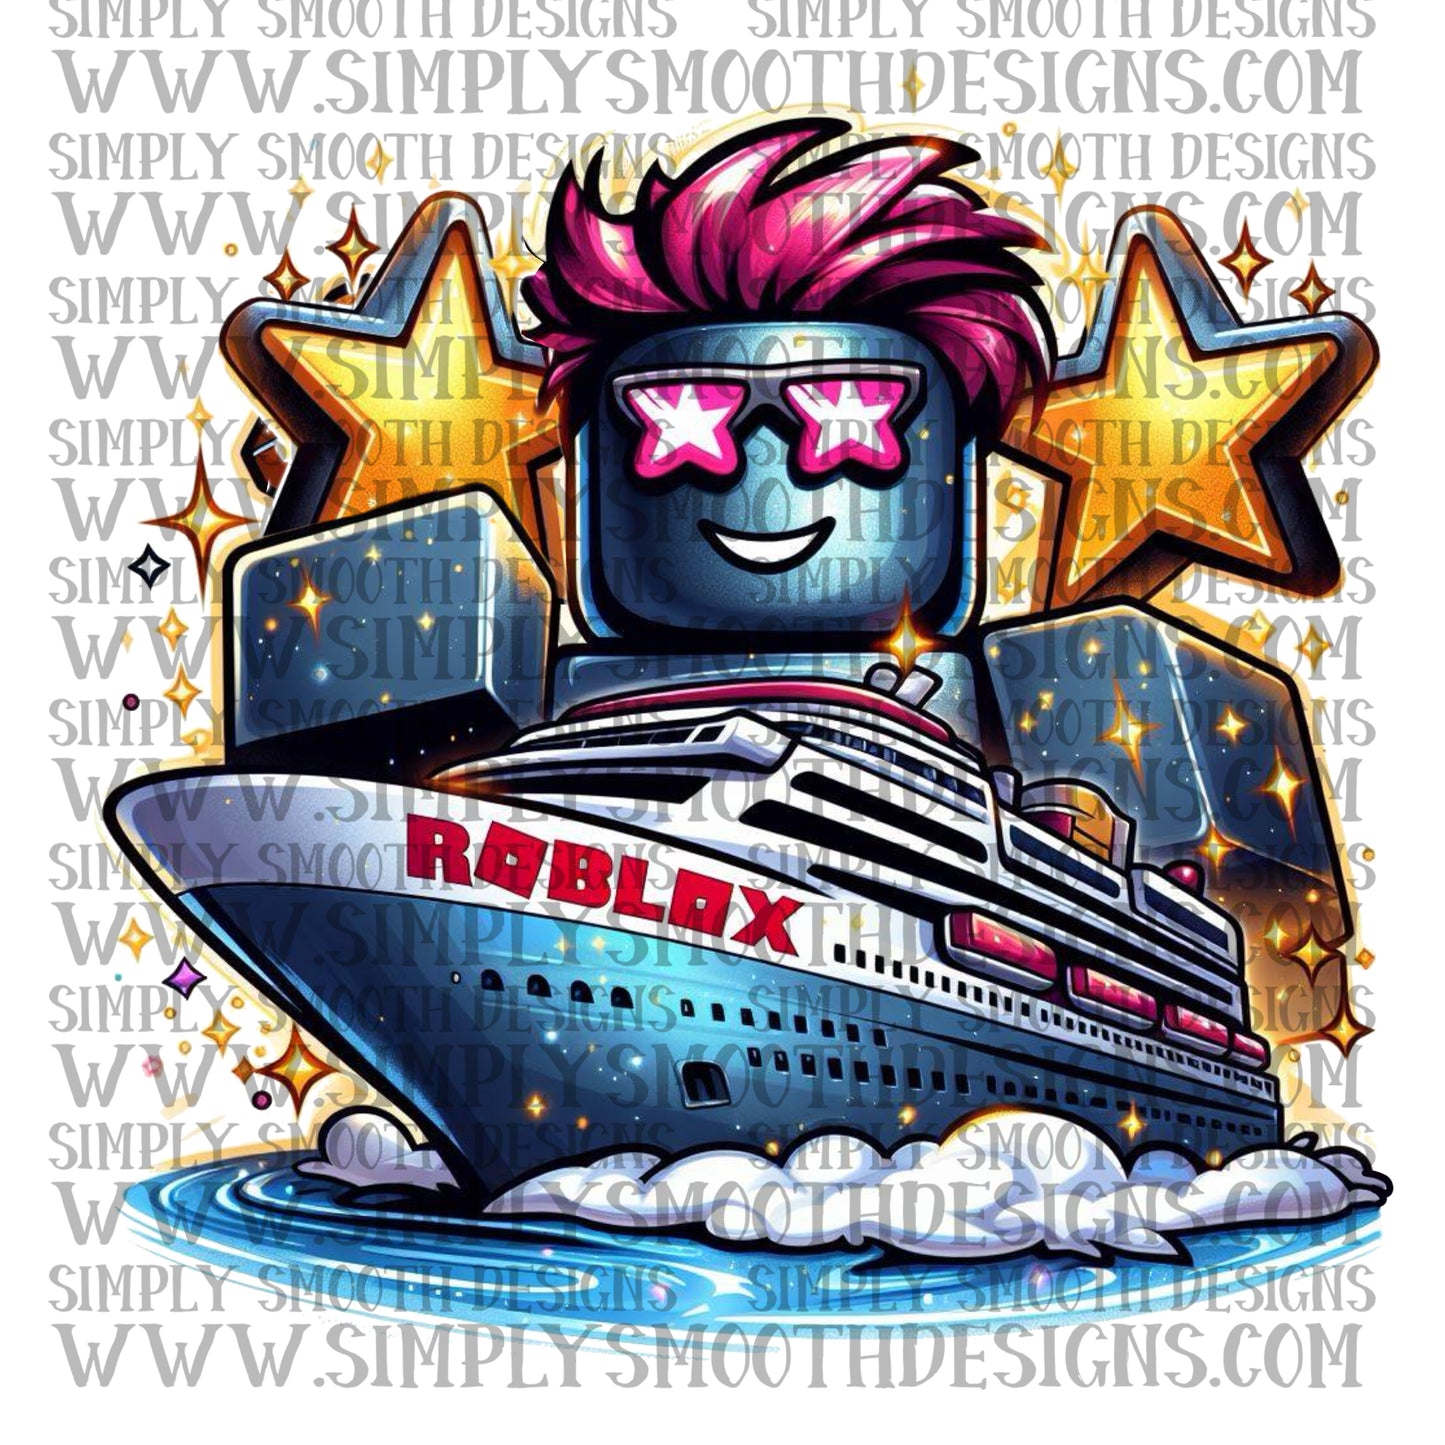 Roblox cruise